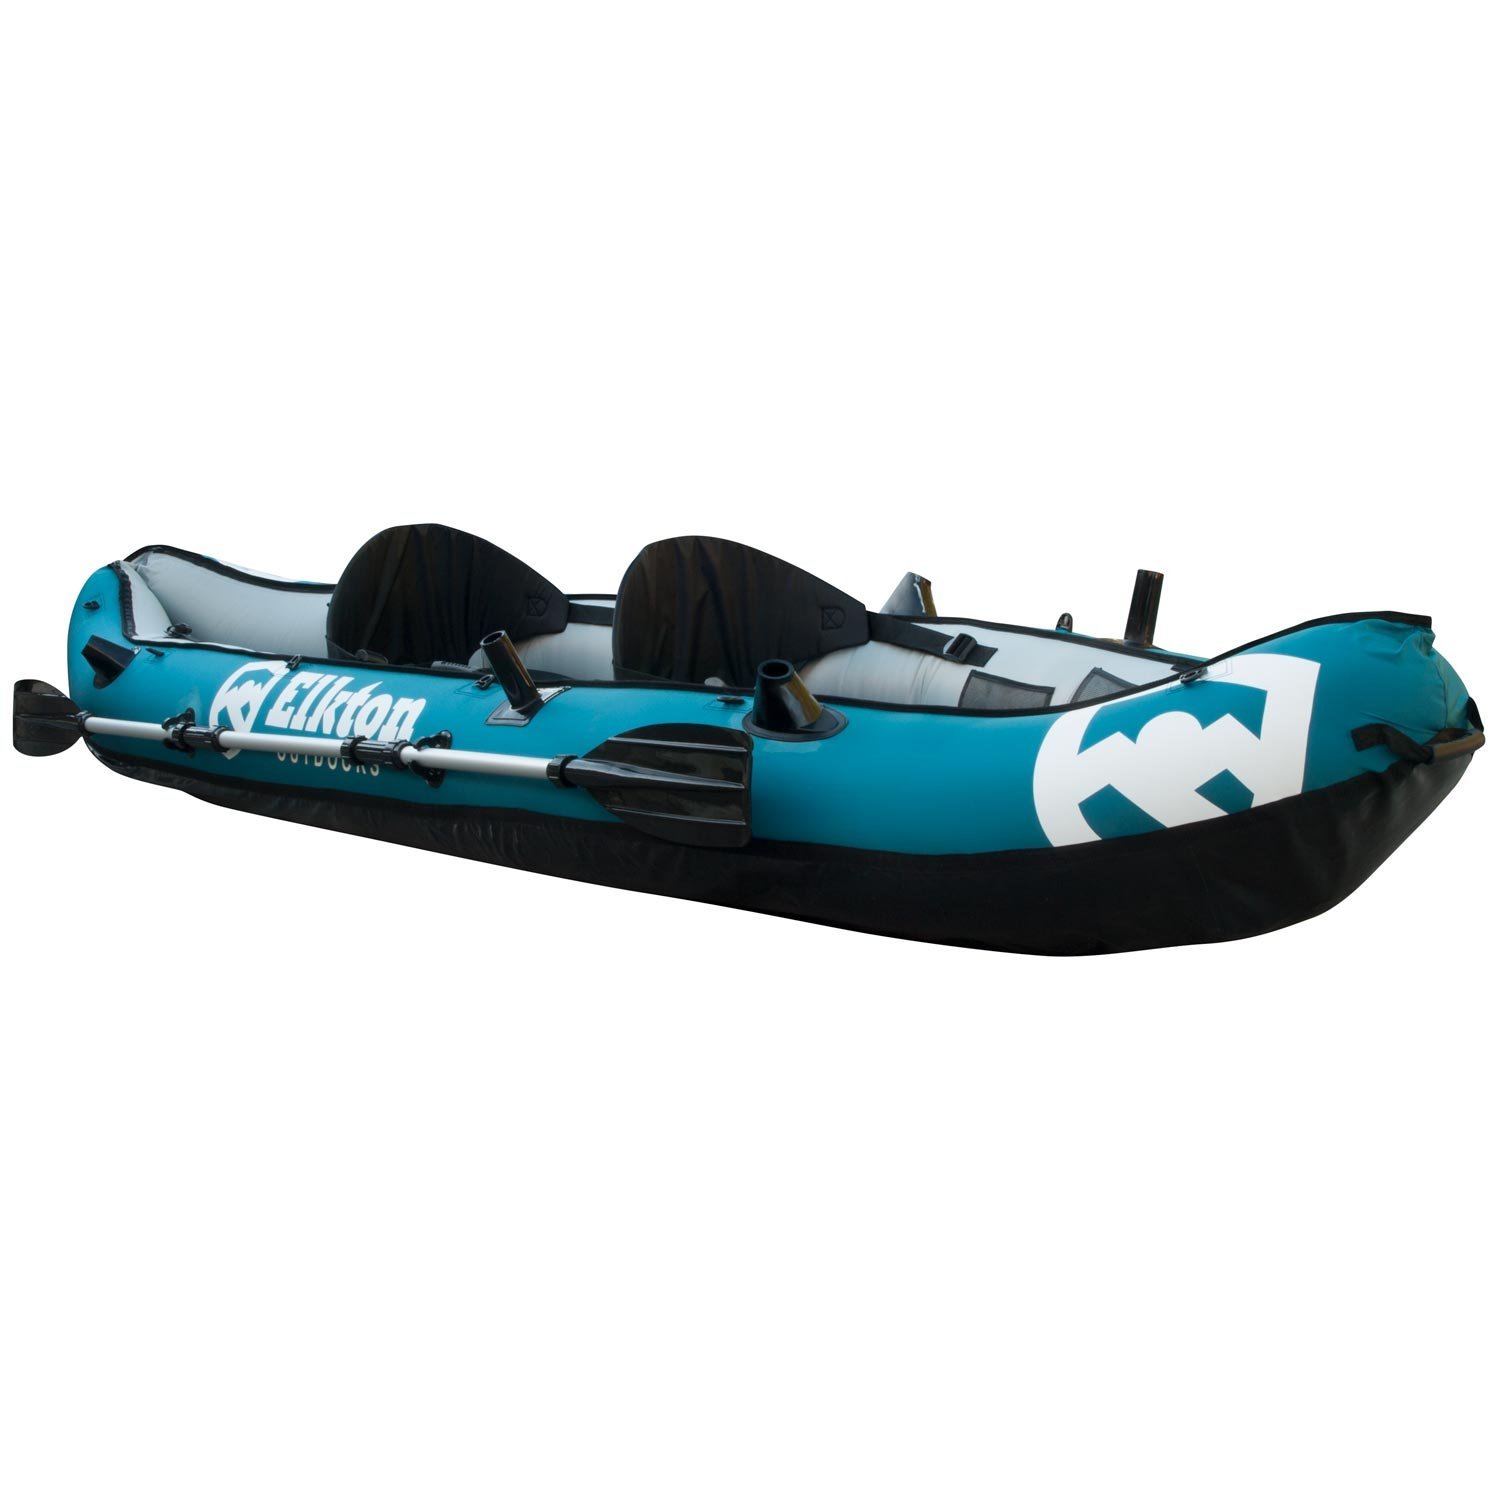 Ten-foot inflatable fishing kayak from Elkton